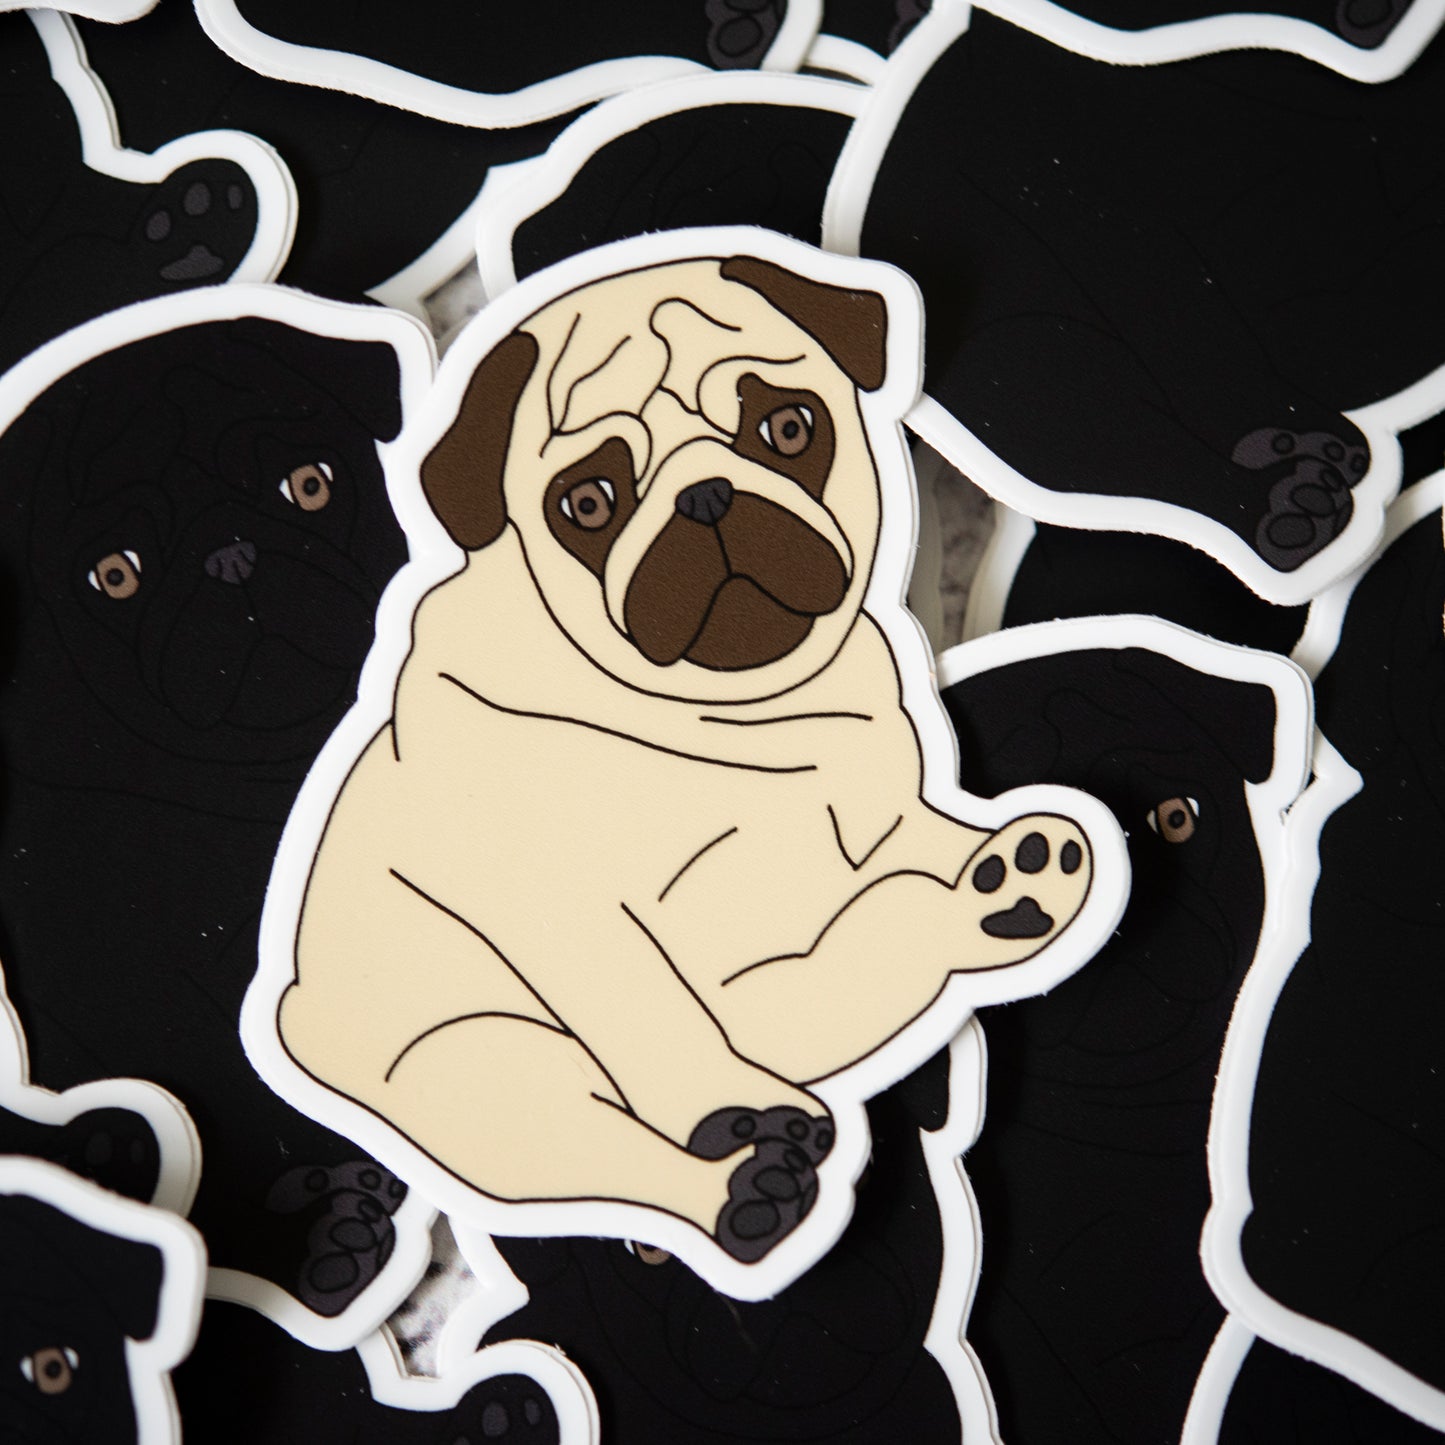 Fawn Chubby Pug Sticker